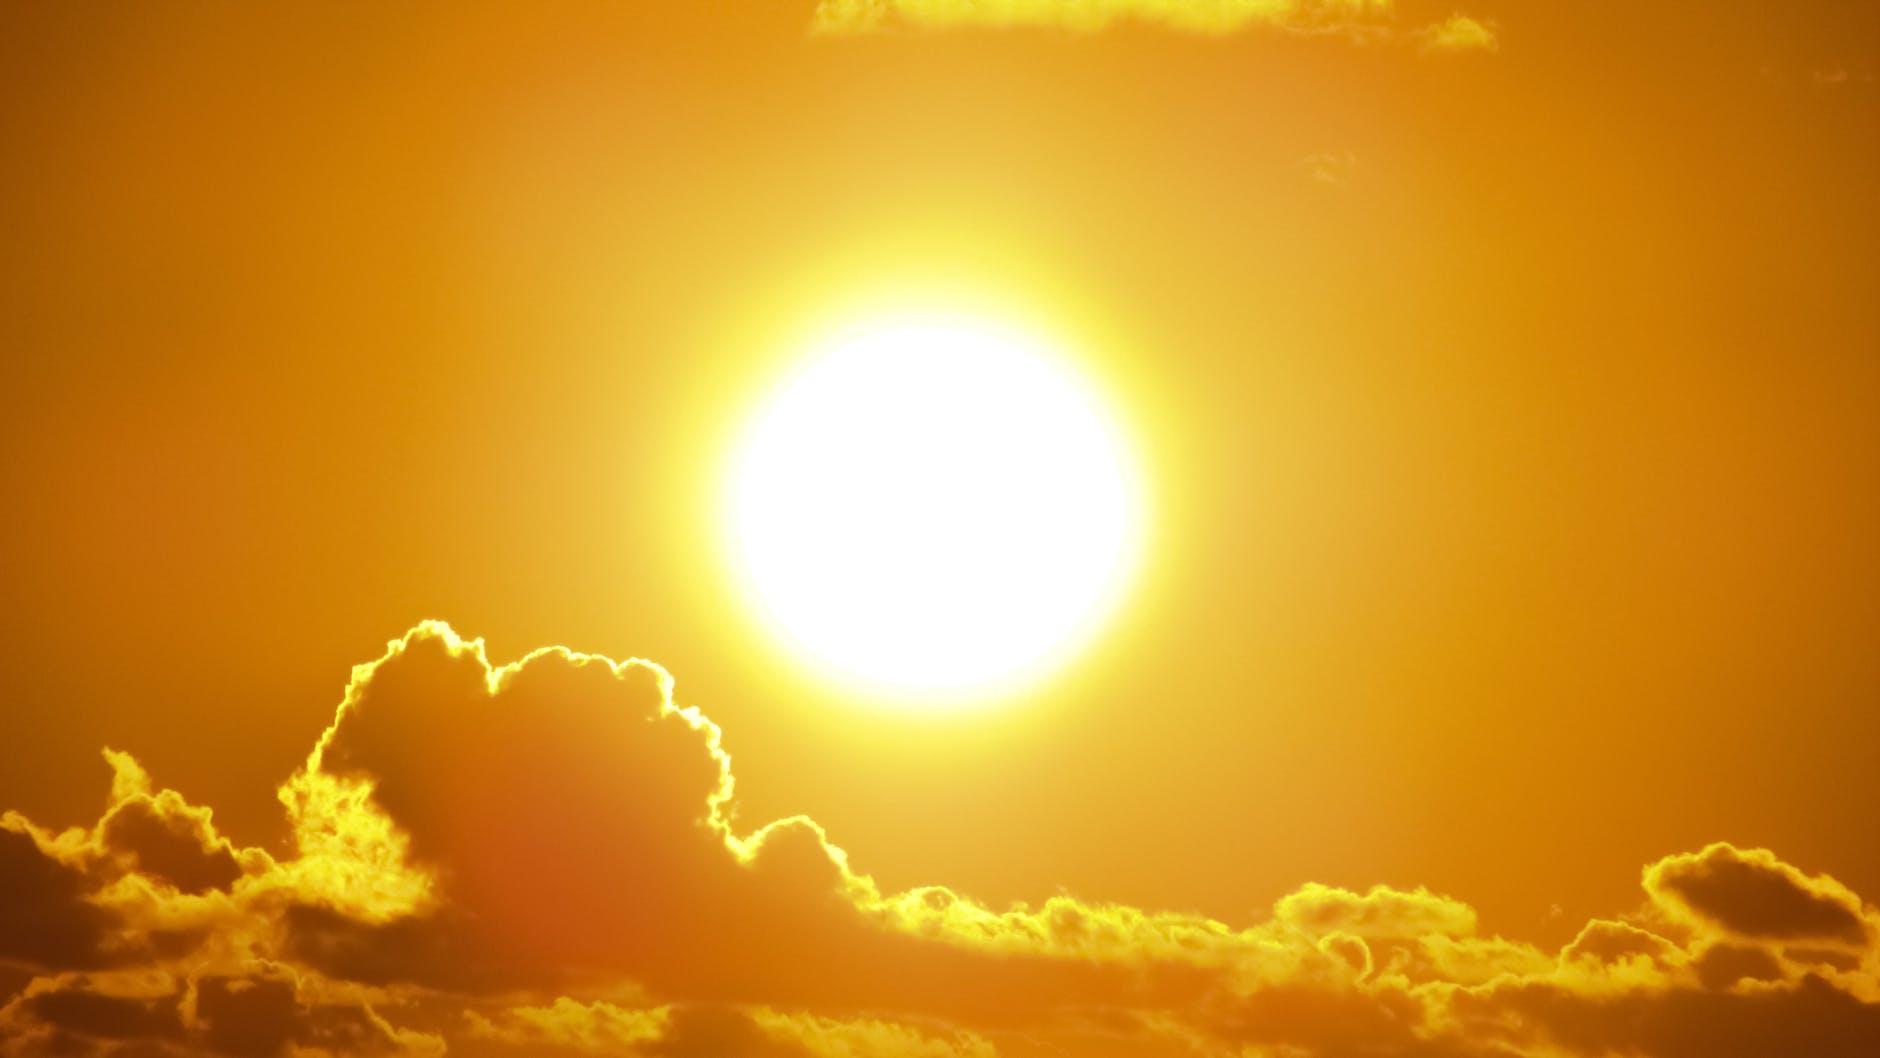 Heat index values to exceed 100 degrees Sun, Mon - Vero News